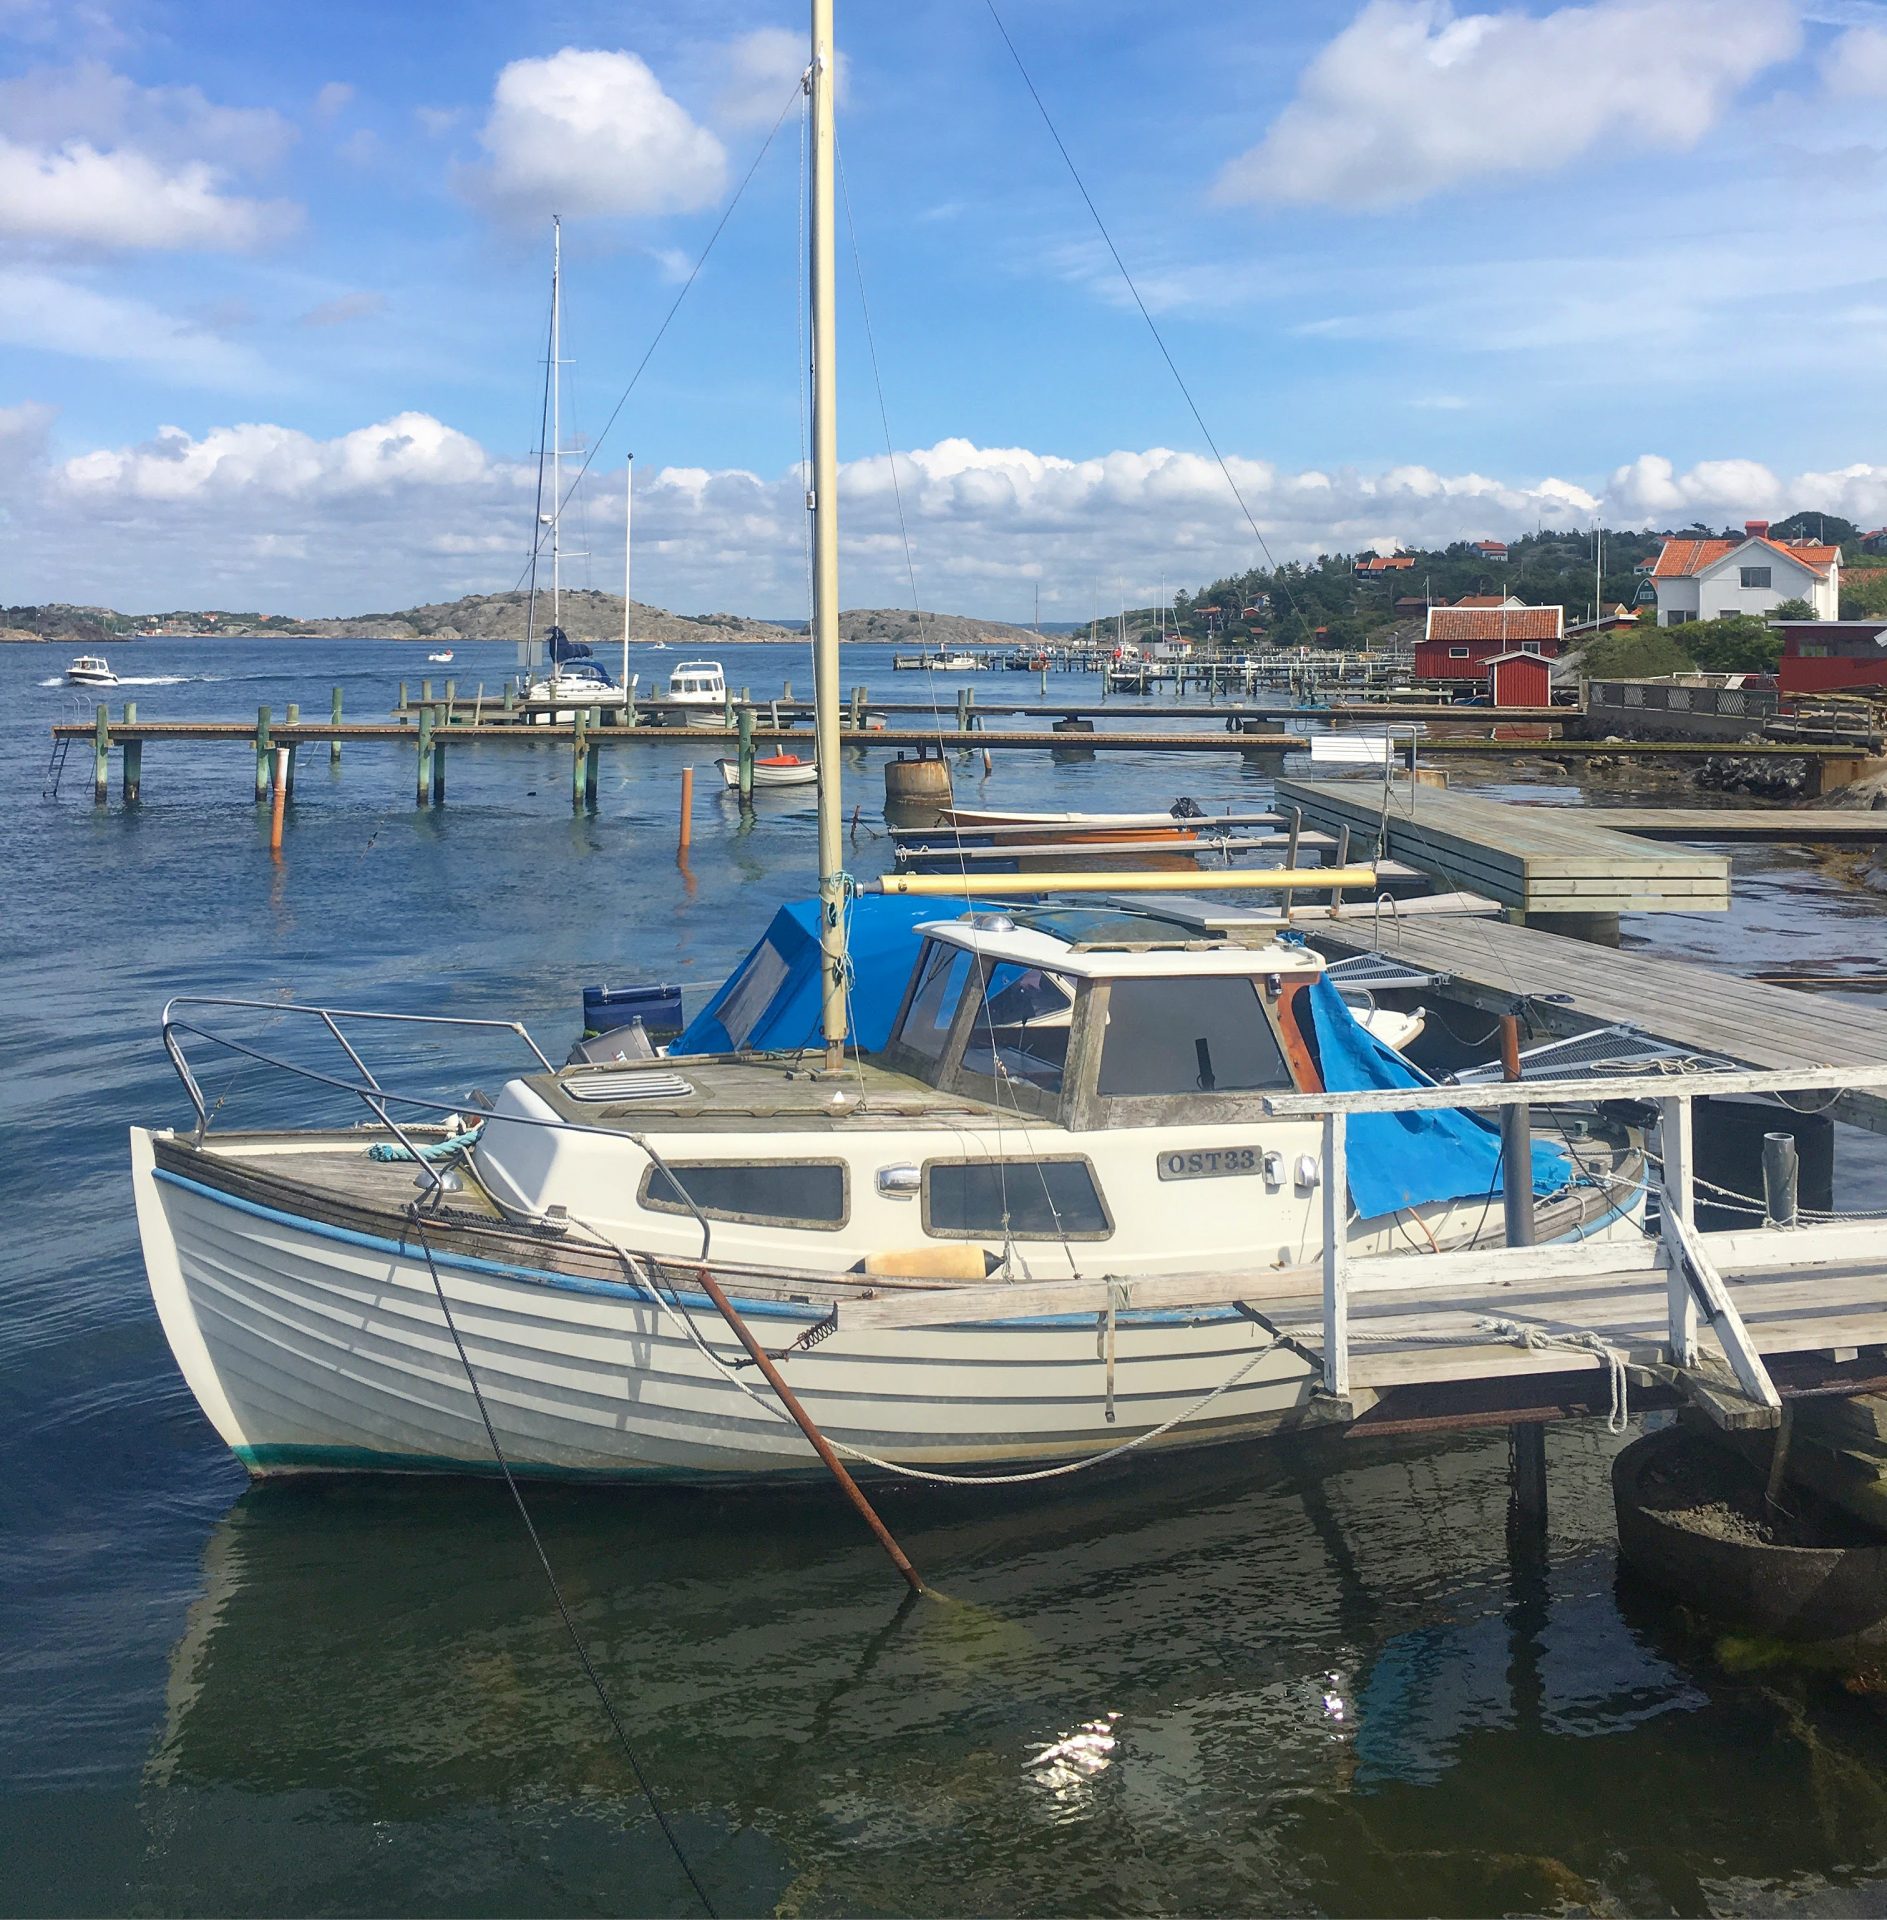 styrso island southern archipelago - Southern Archipelago Day Trip from Gothenburg